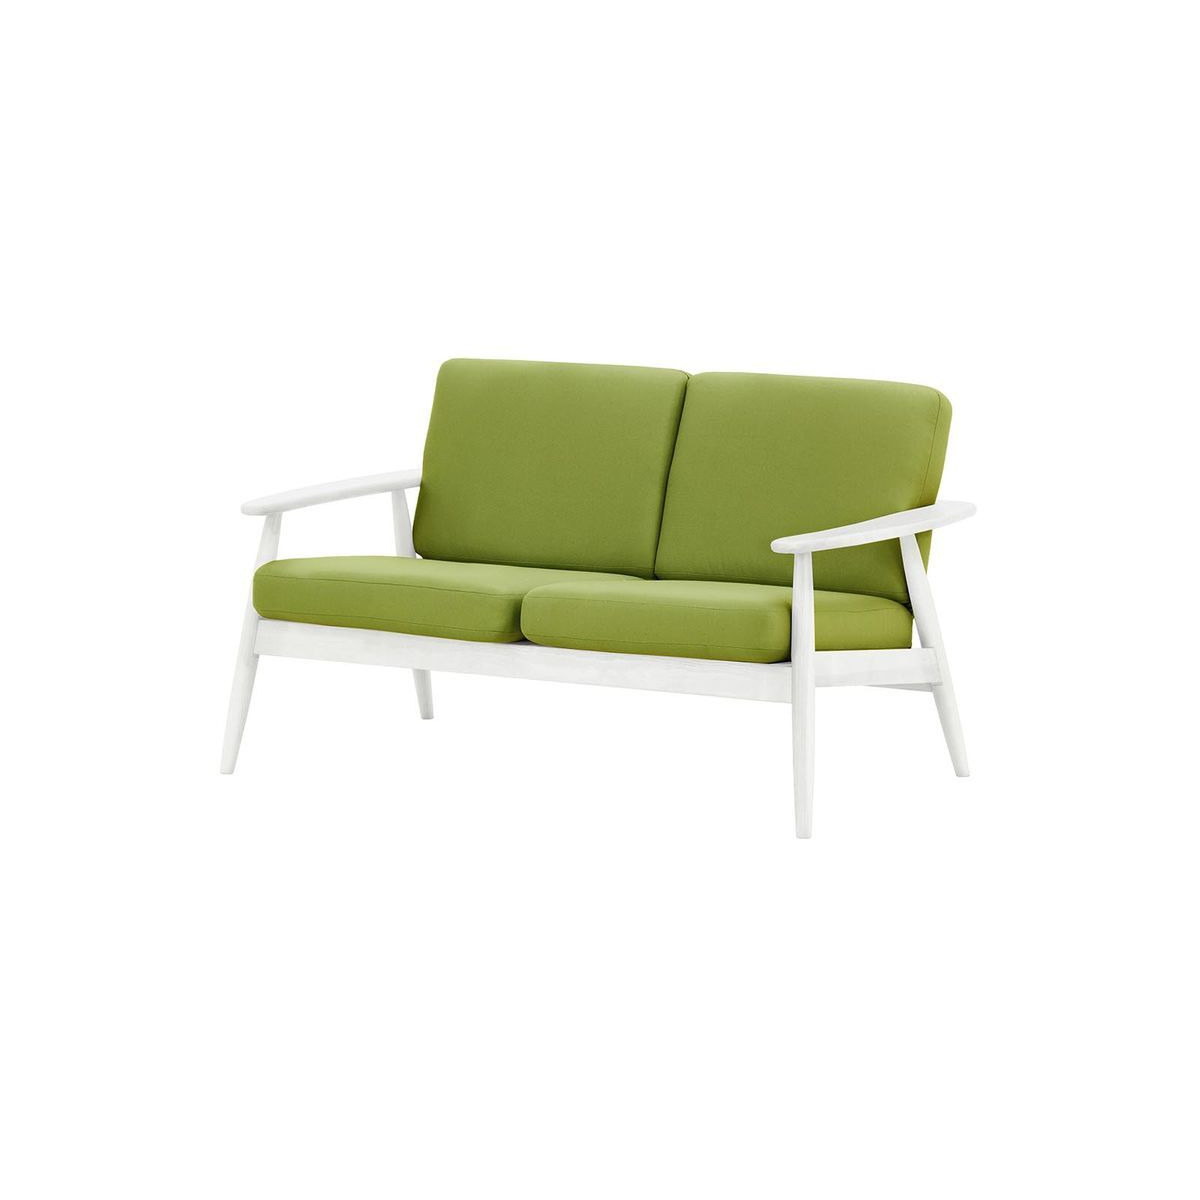 Demure Aqua 2 Seater Garden Sofa, green, Leg colour: 8035 white - image 1